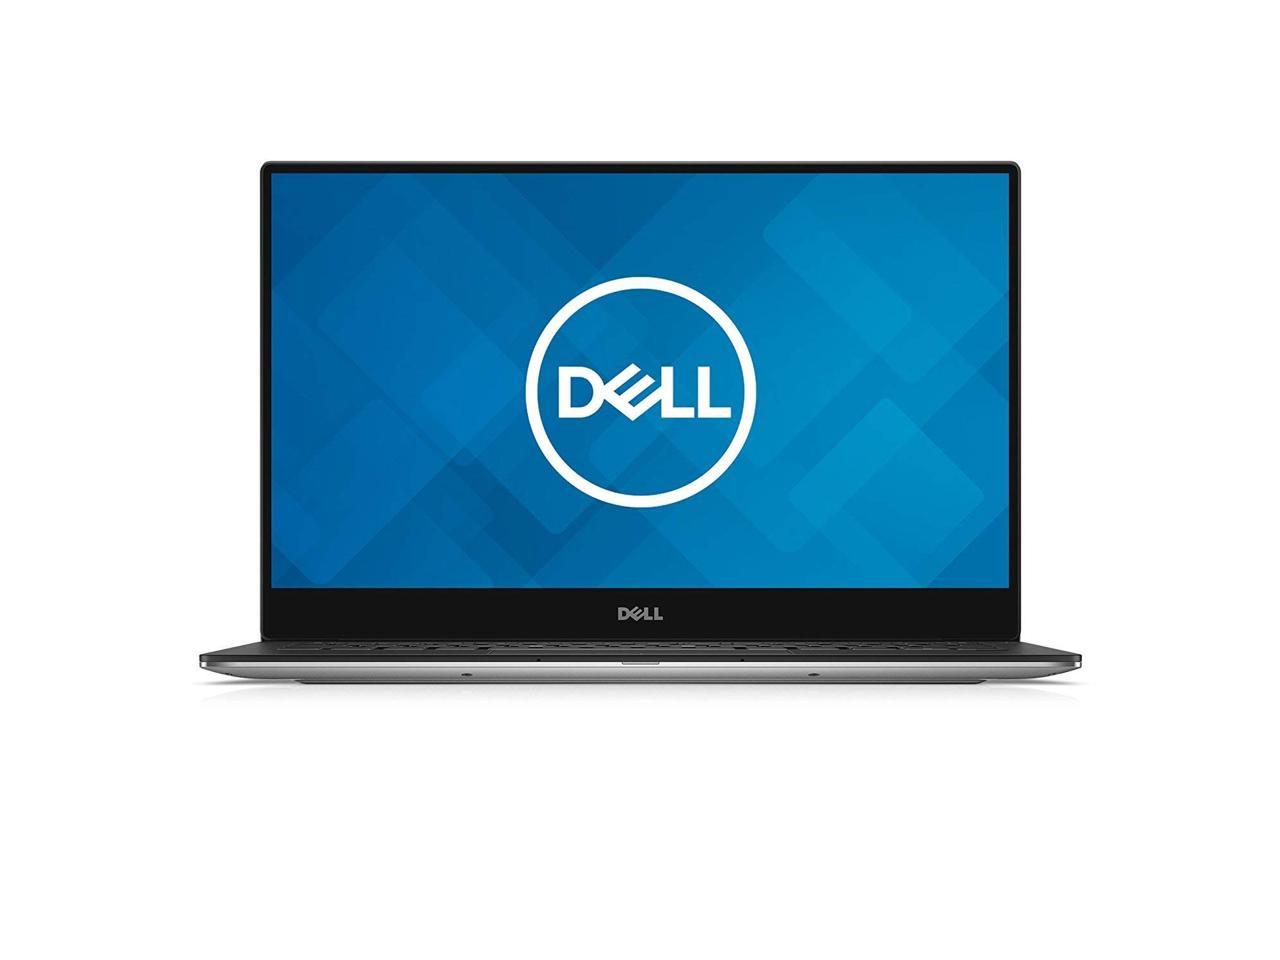 Dell XPS 13 Silver Edition Full HD InfinityEdge anti-glare Touchscreen Laptop Intel Core i5-8250U | 8GB RAM | 128GB SSD | Backlit Keyboard | Thunderbolt 3 |Windows 10